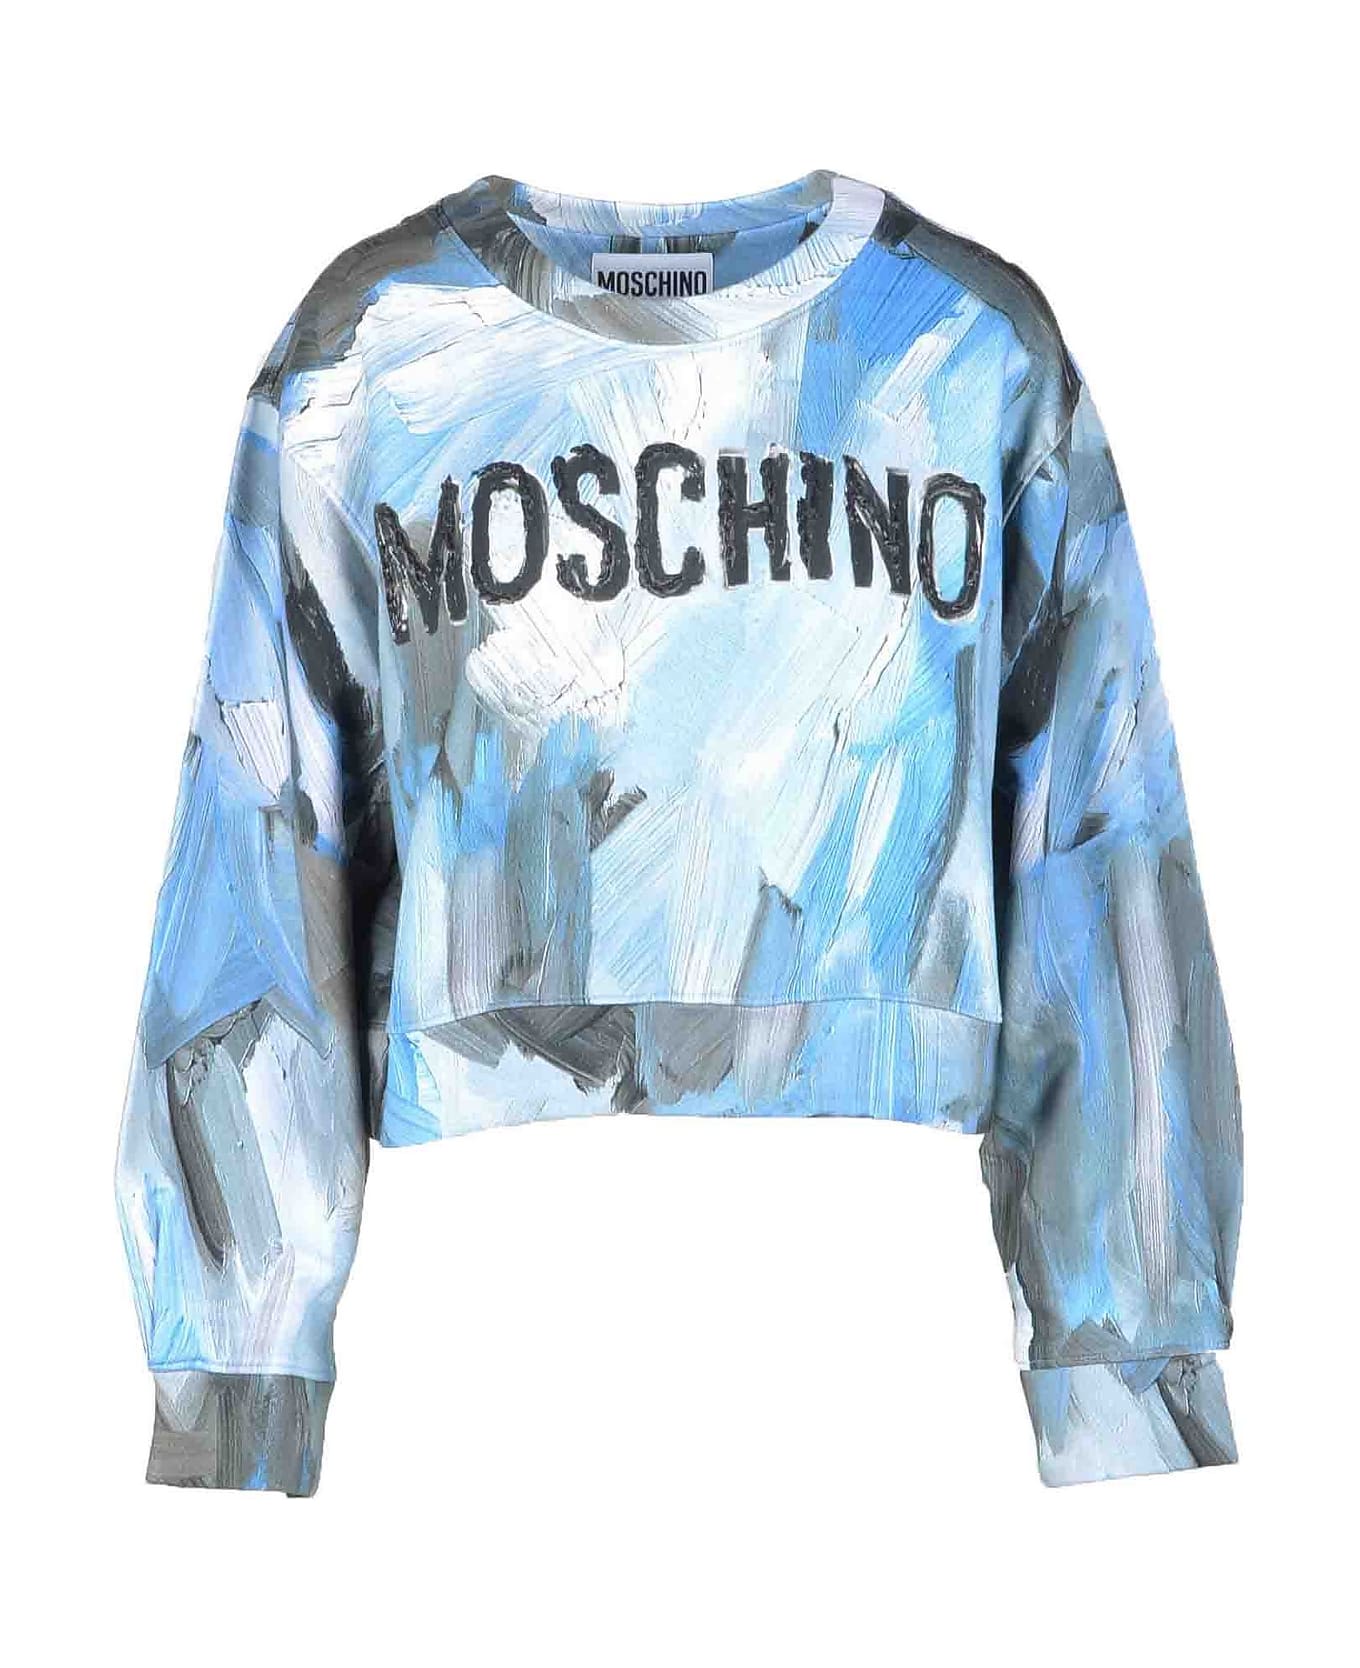 Moschino Women's Sky Blue Sweatshirt - Sky Blue